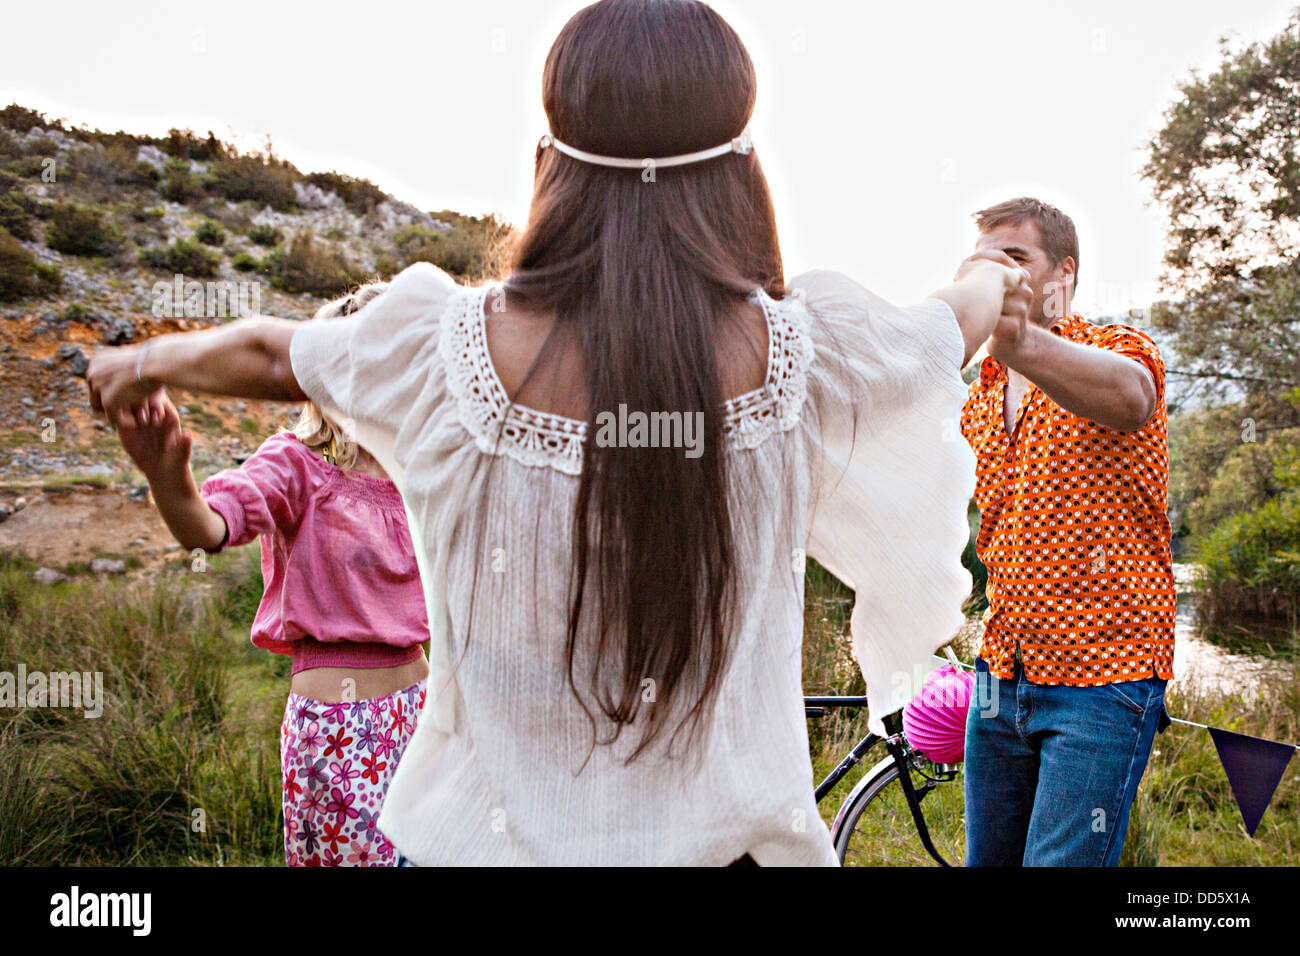 Croatia, Dalmatia, Young people dancing outdoors Stock Photo